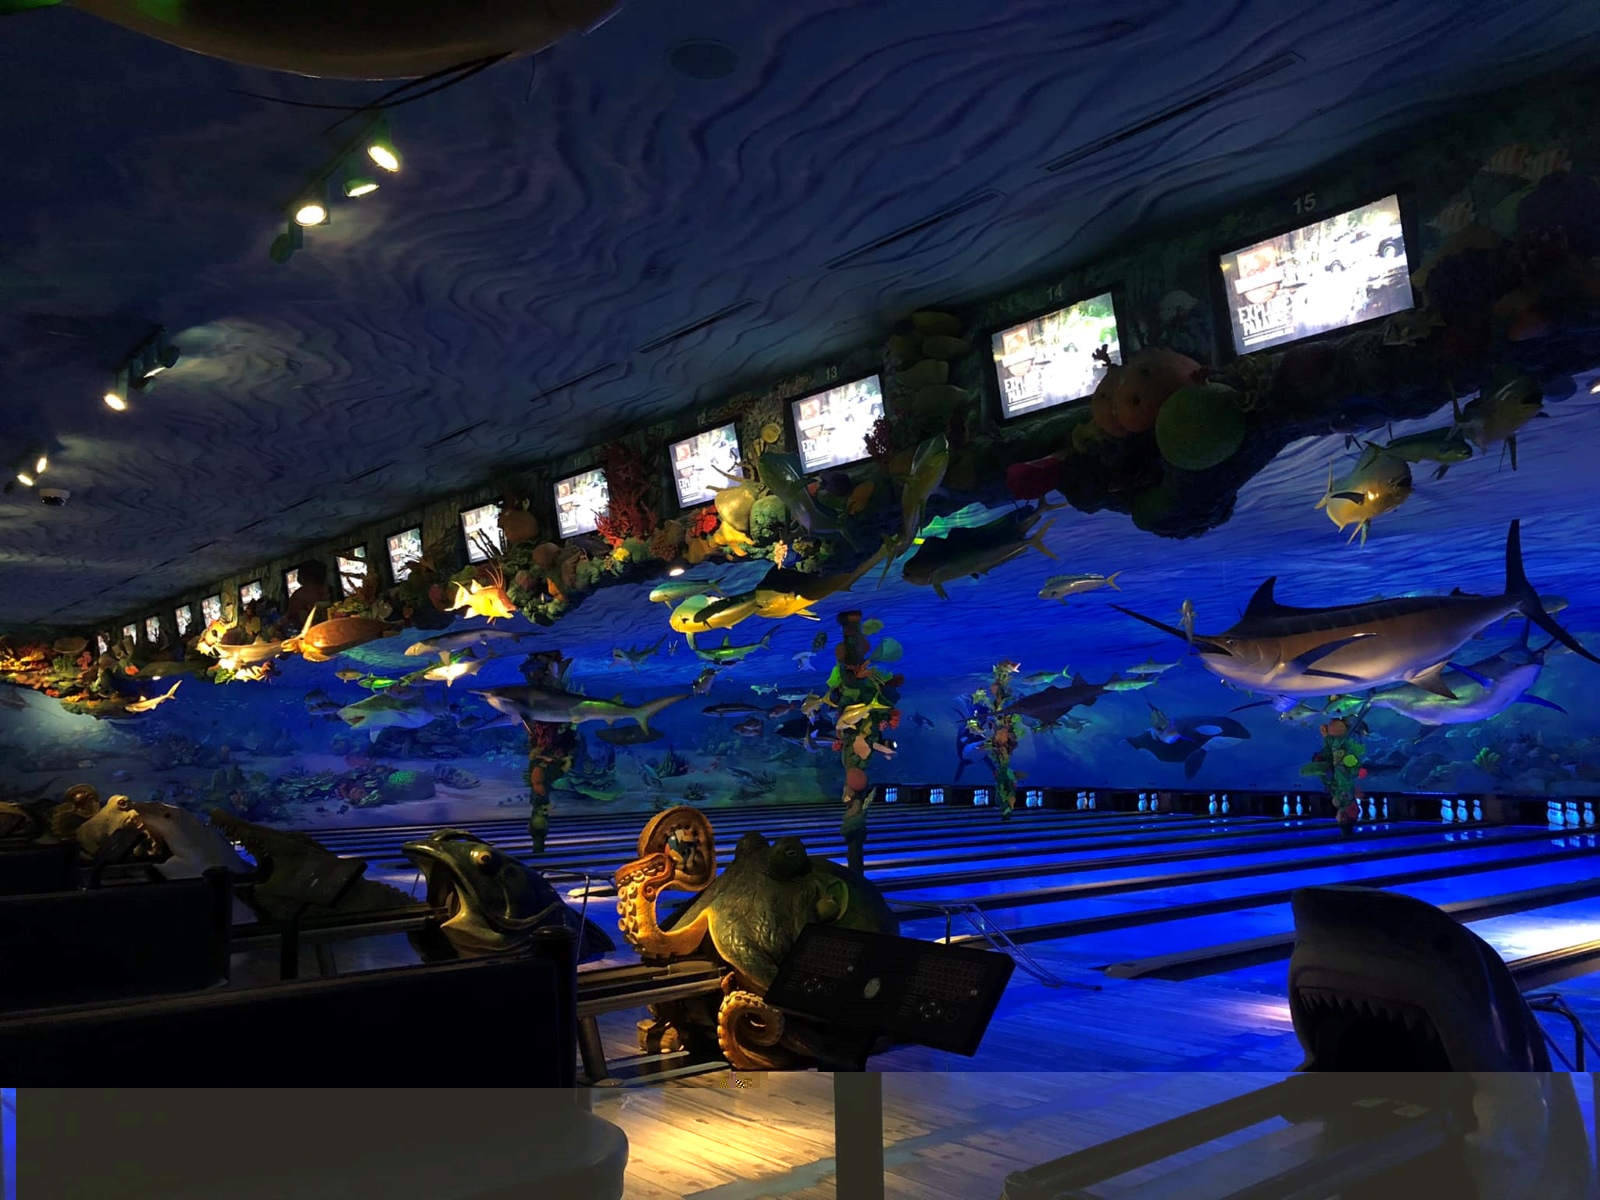 Big Cedar Lodge's aquatic-themed bowling alley